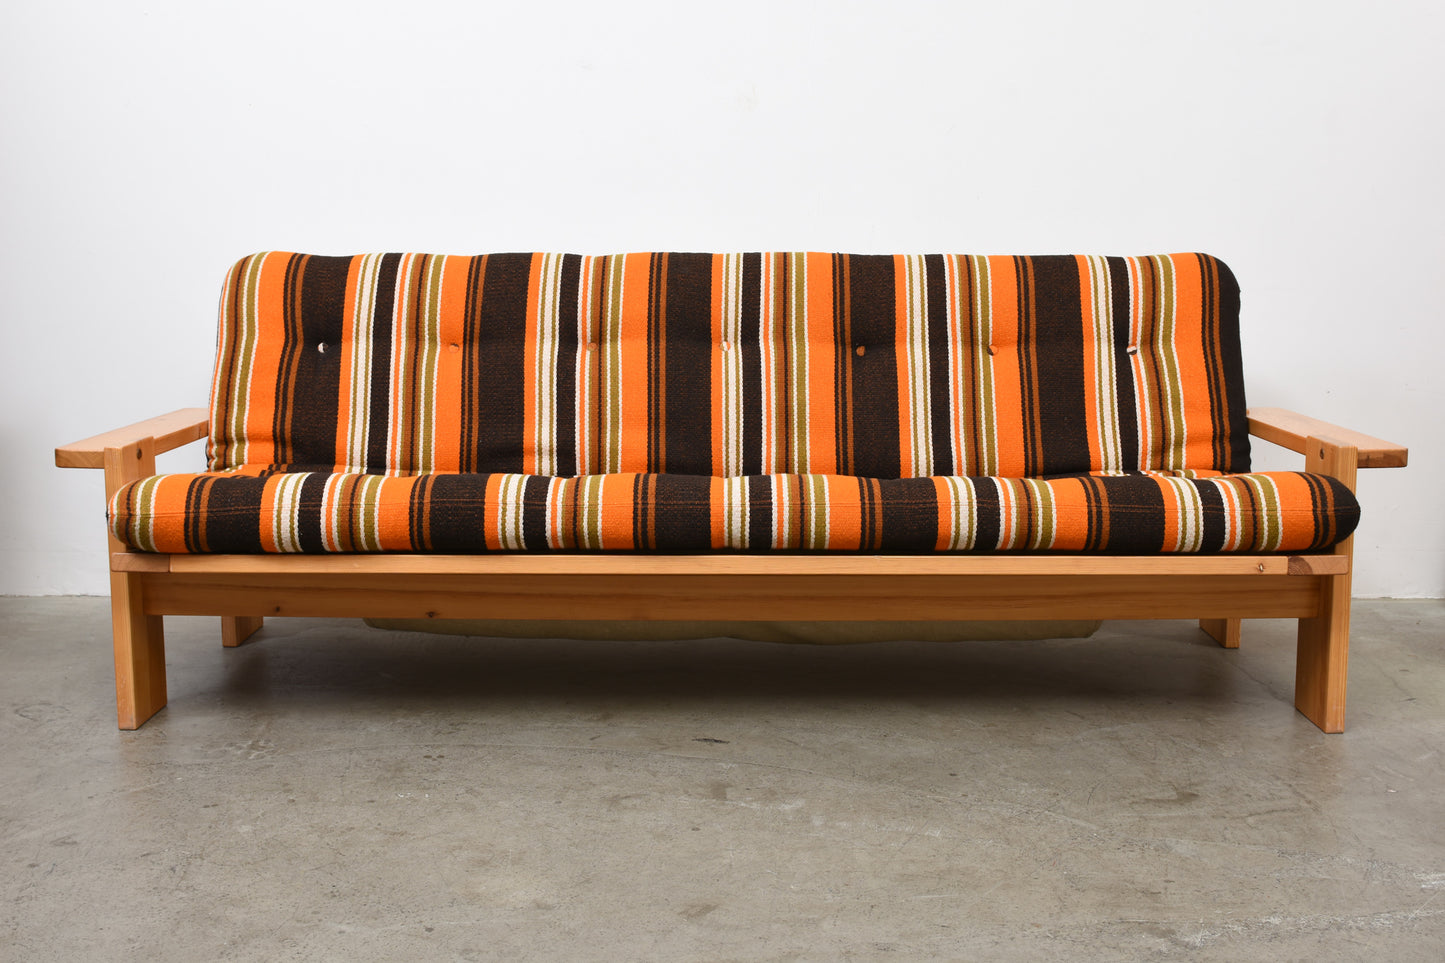 1970s Swedish sofa bed